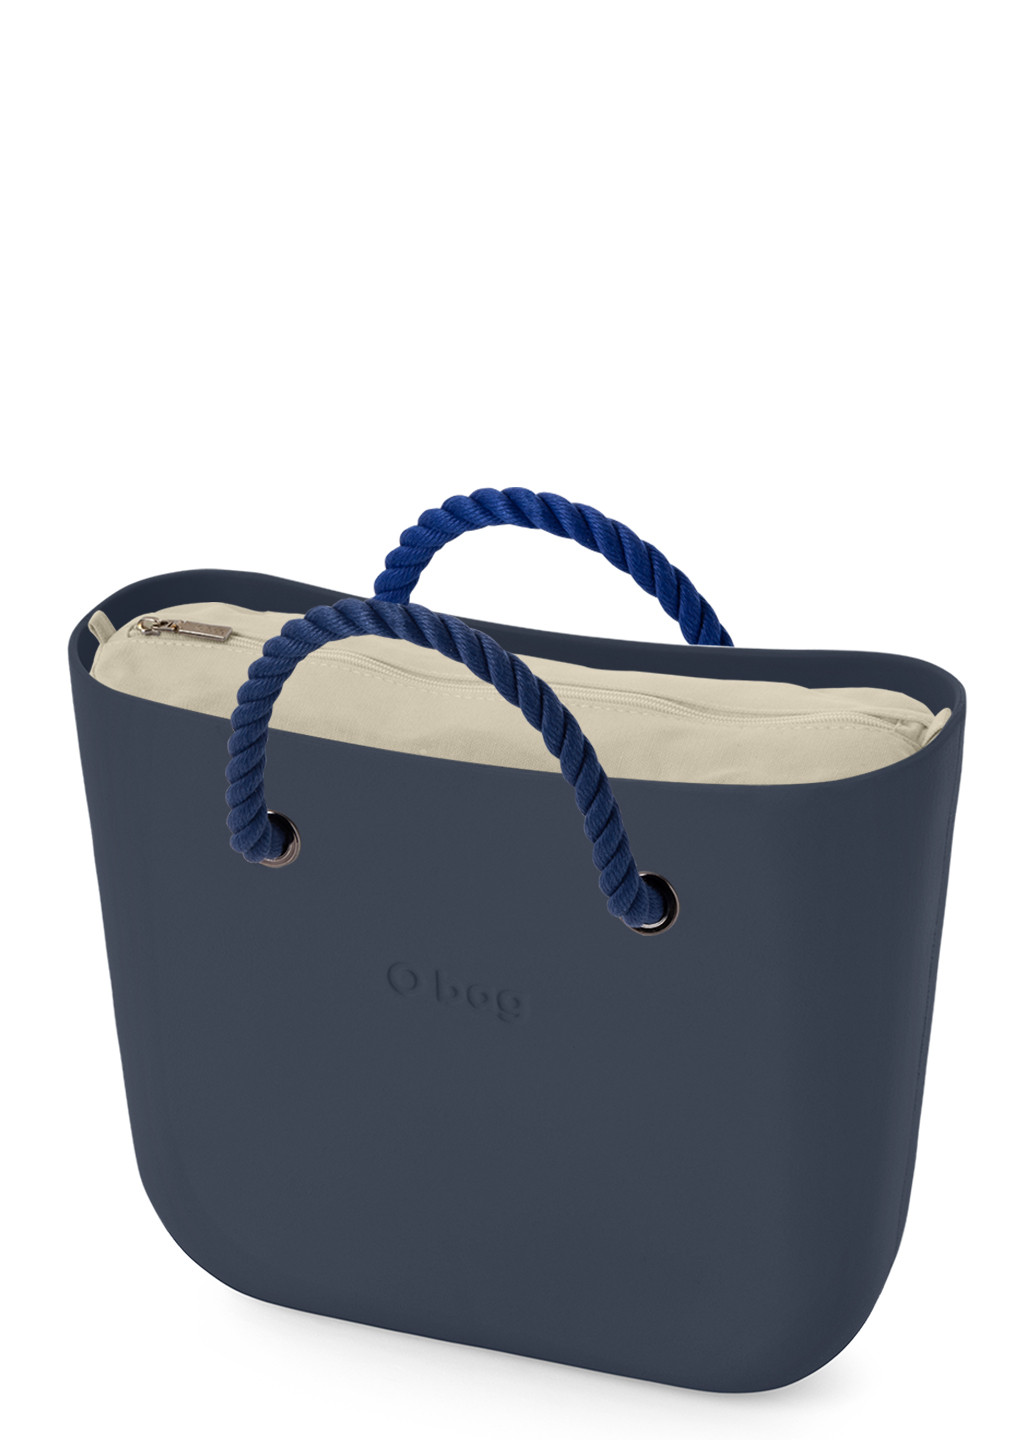 Женская сумка O bag mini (234011173)